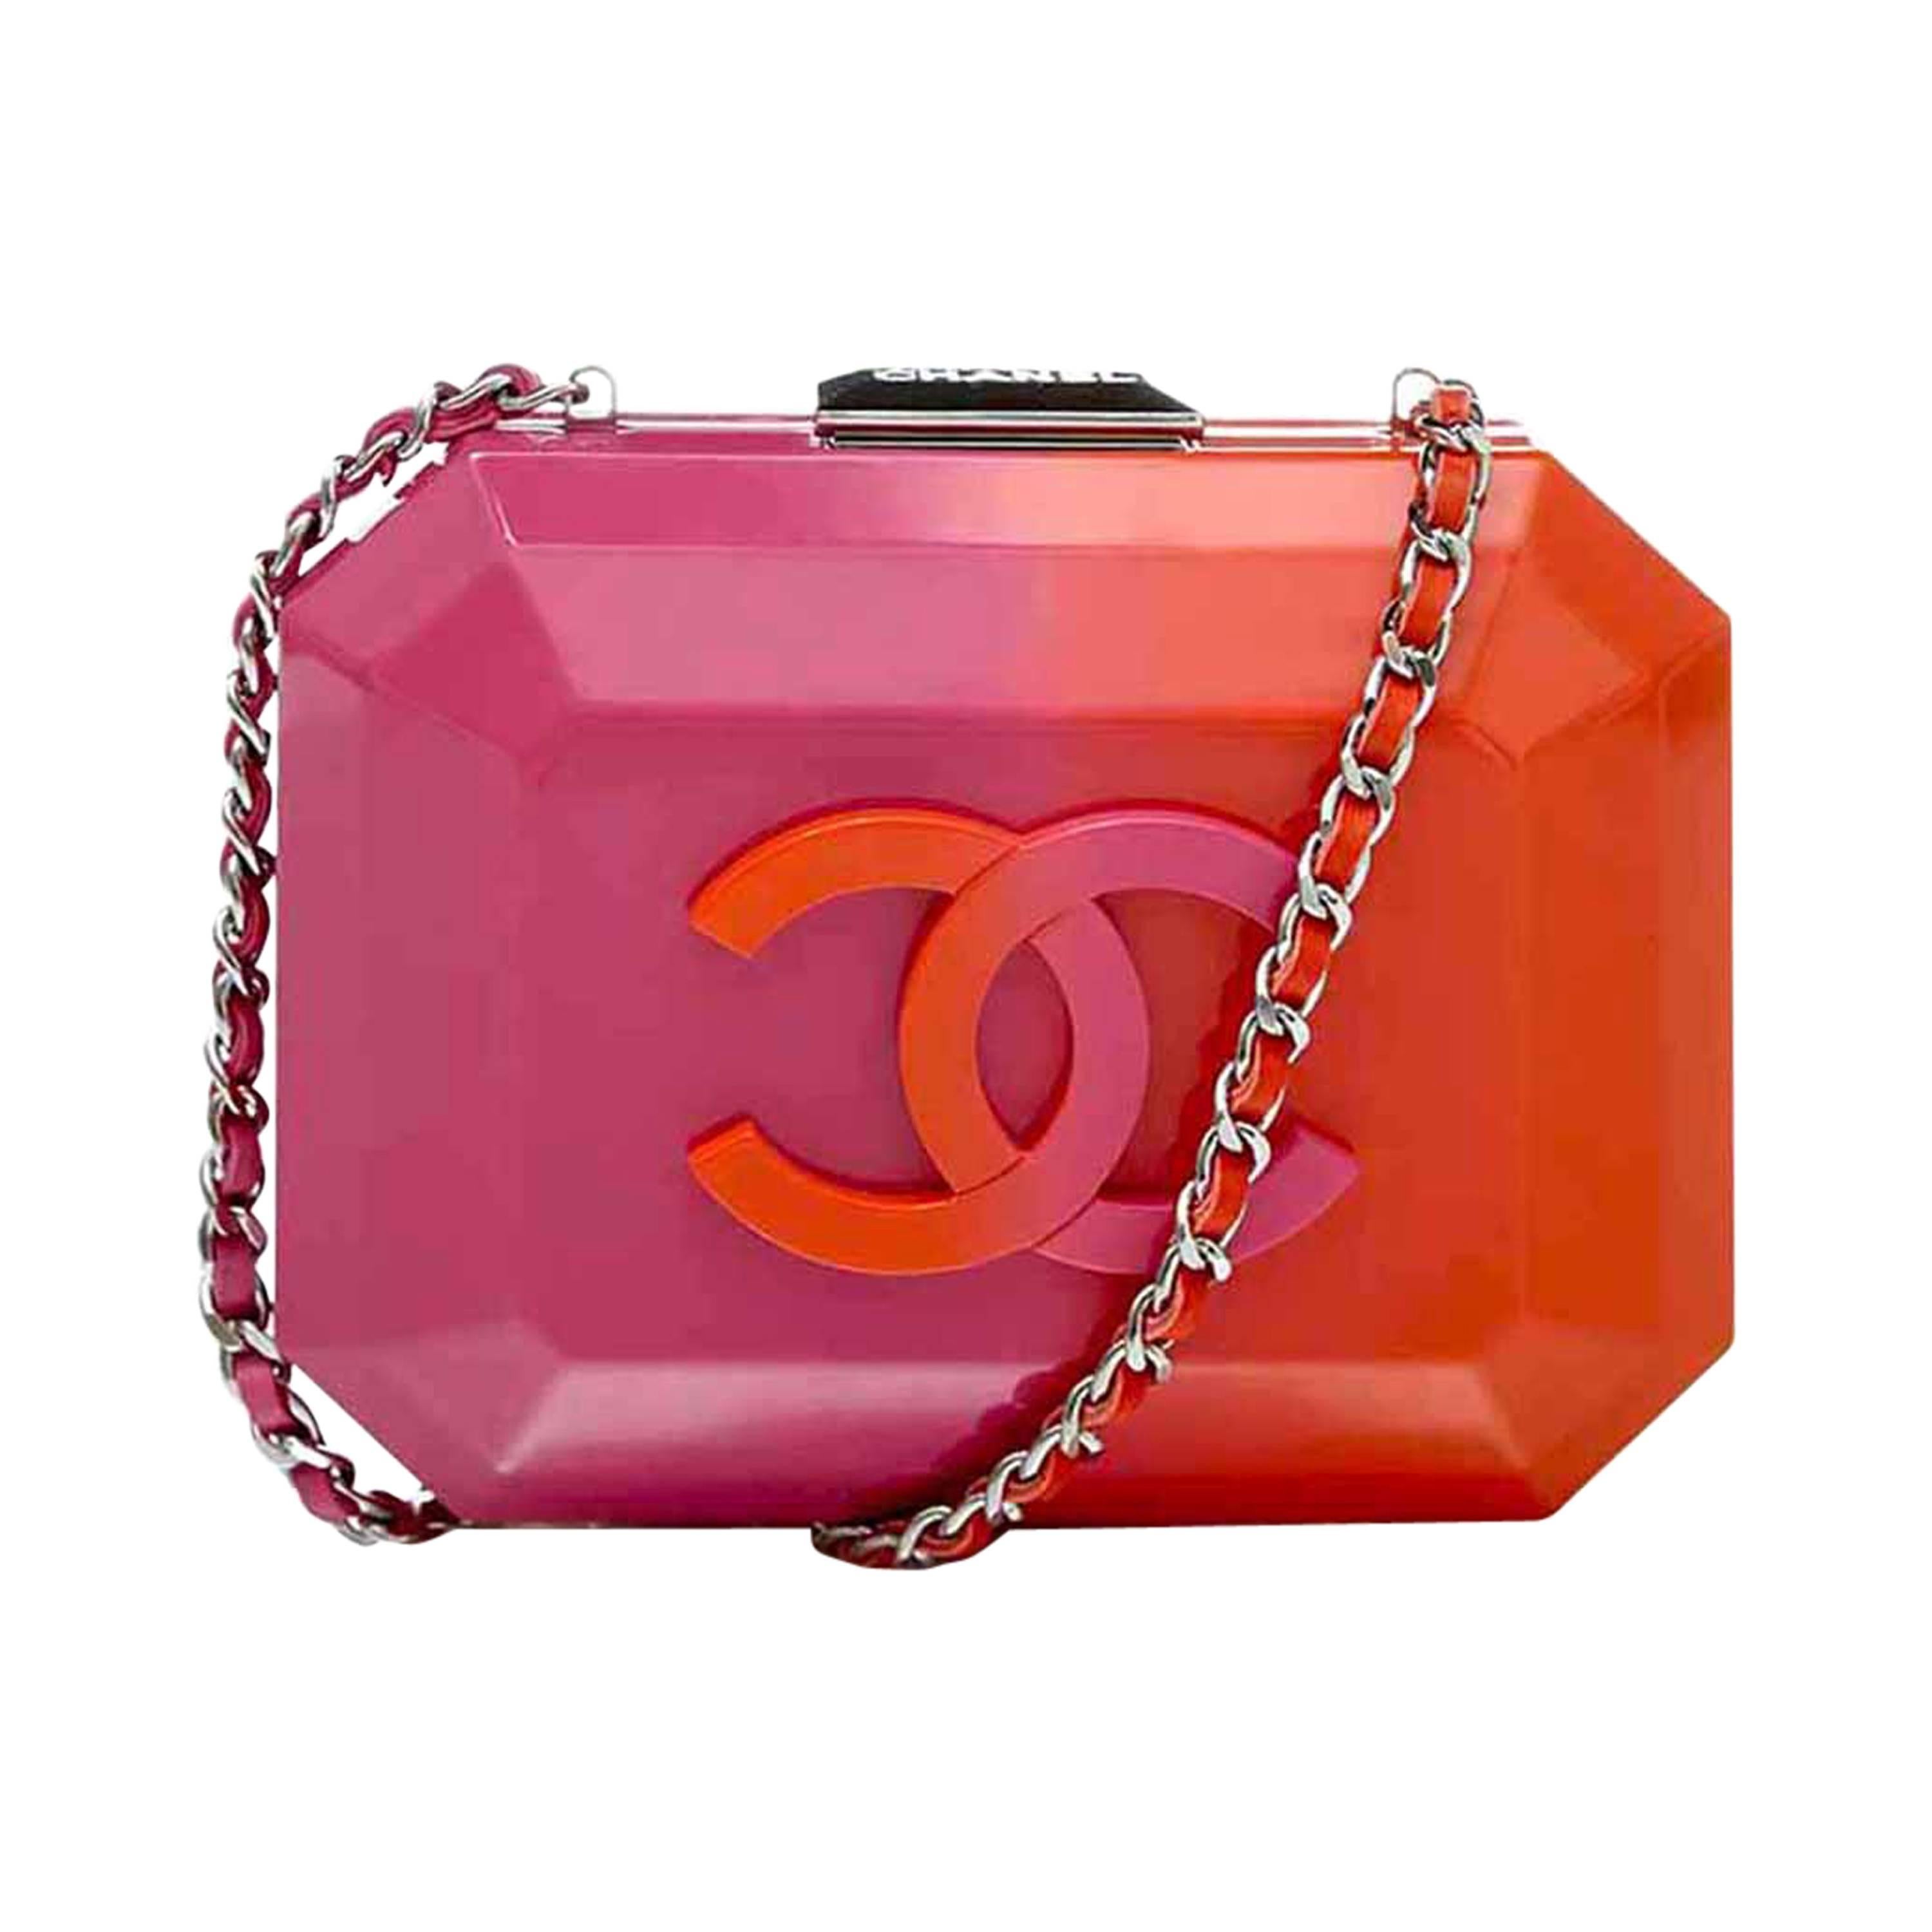 Chanel Pink and Orange Box Bag